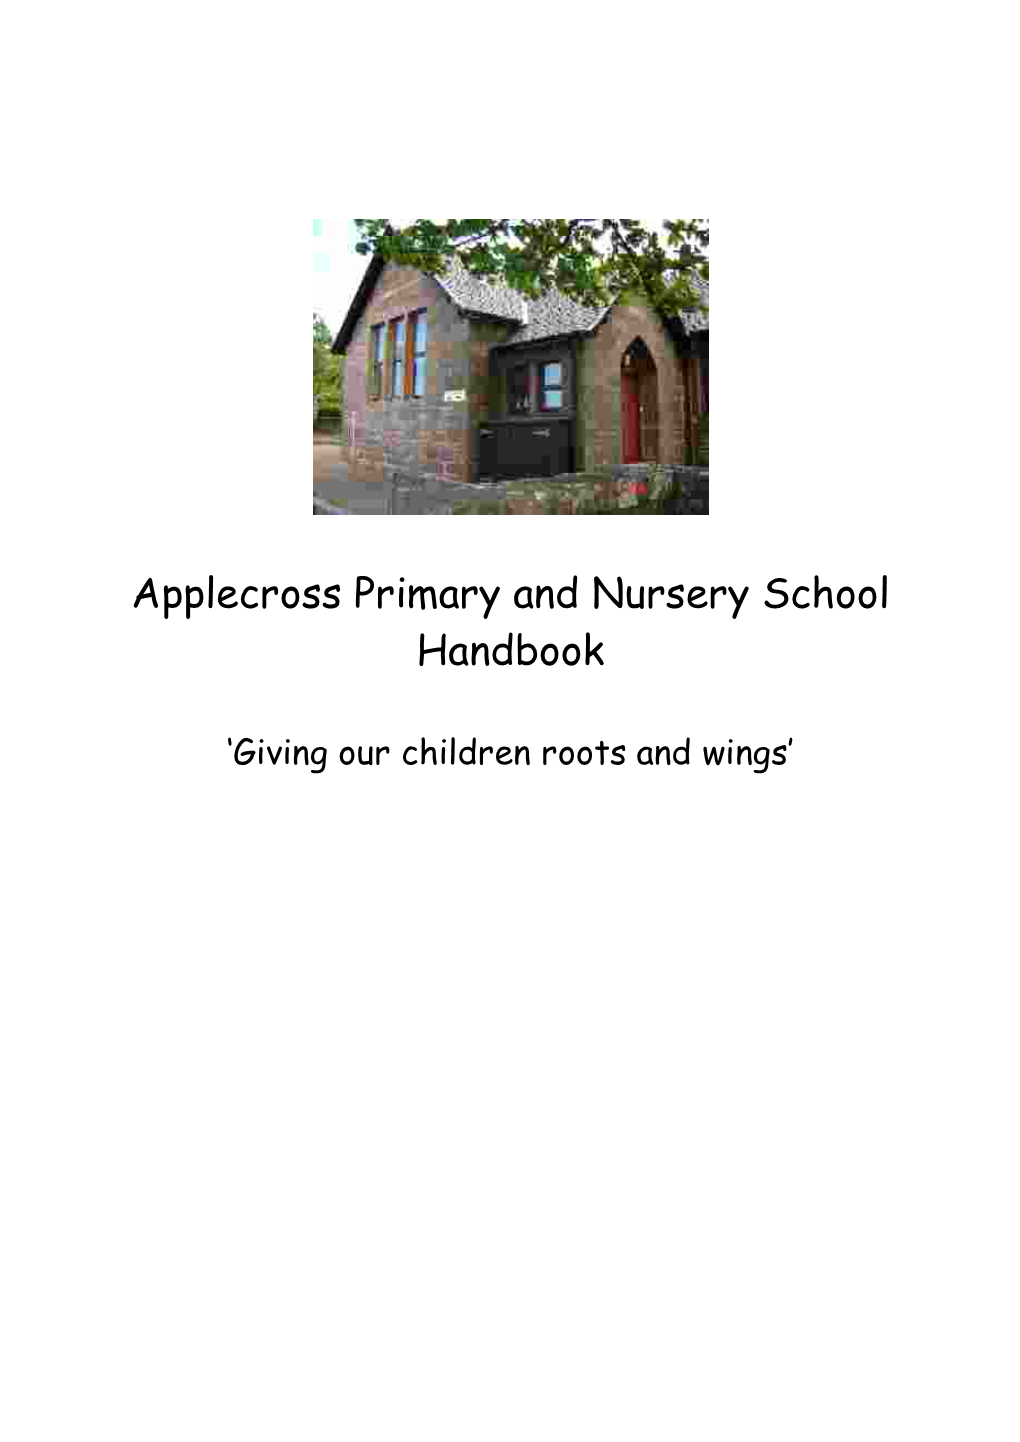 Applecross Primary and Nursery School Handbook